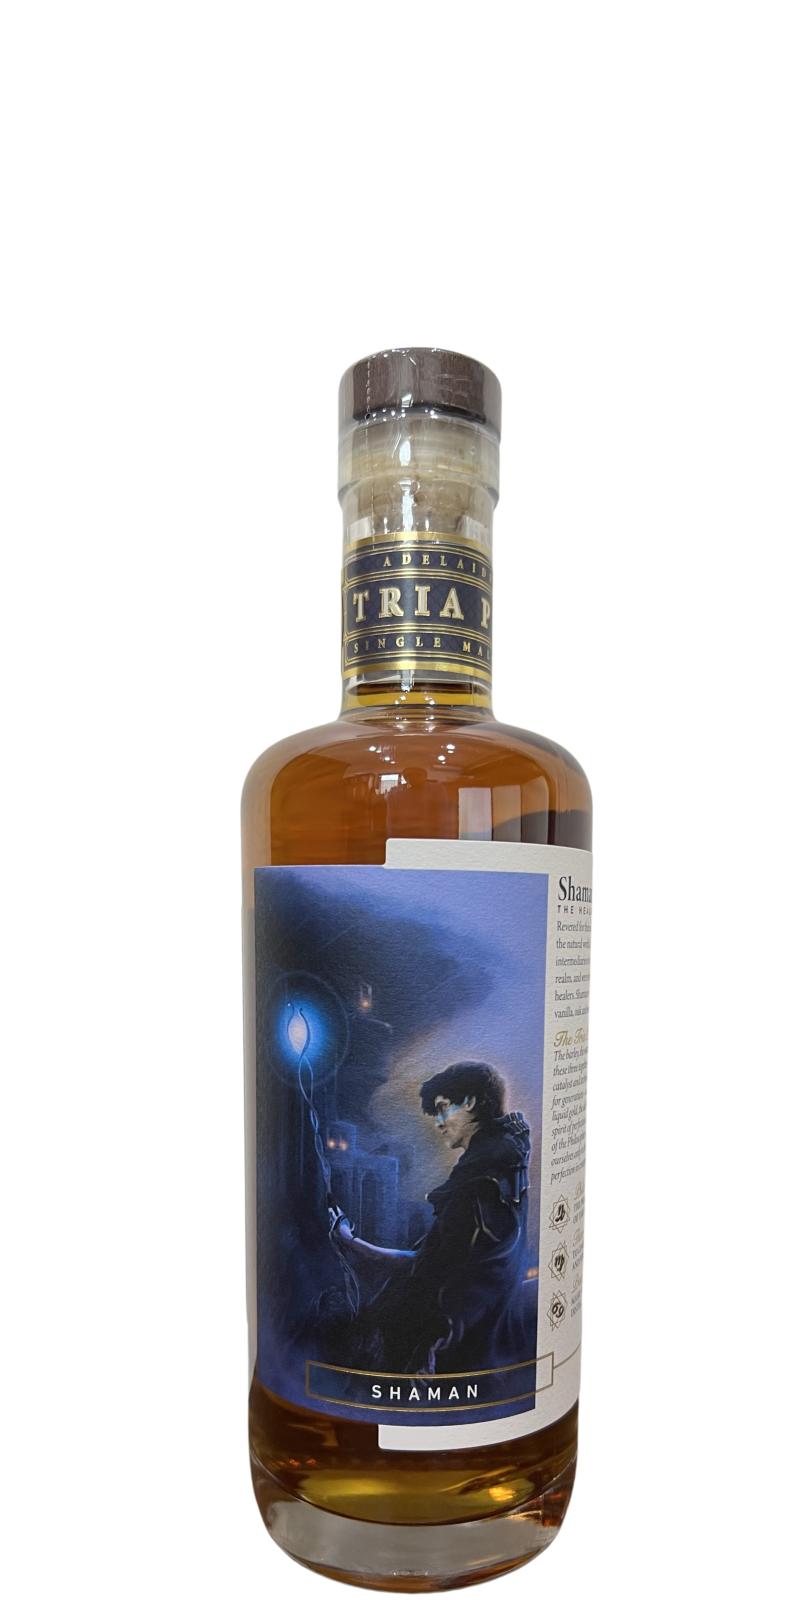 Tria Prima Shaman Rebis Release American Oak Ex Bourbon 61% 500ml